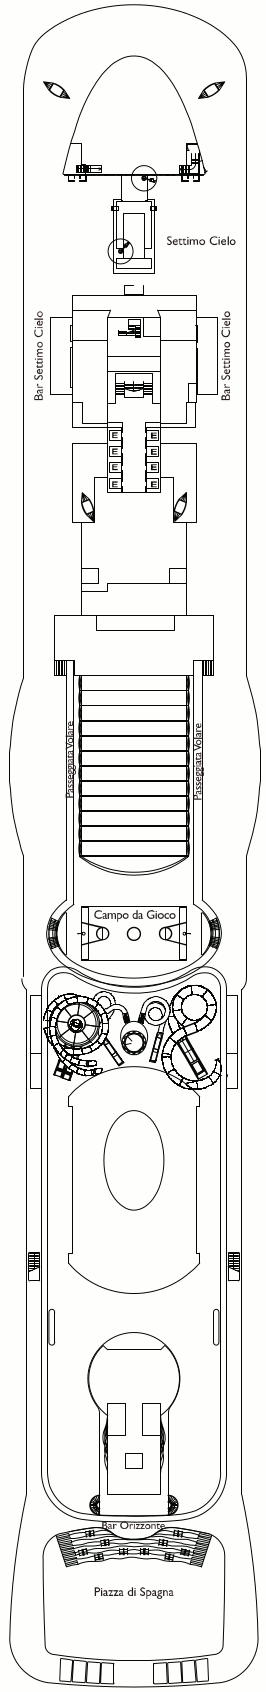 Costa Smeralda Torino Deck